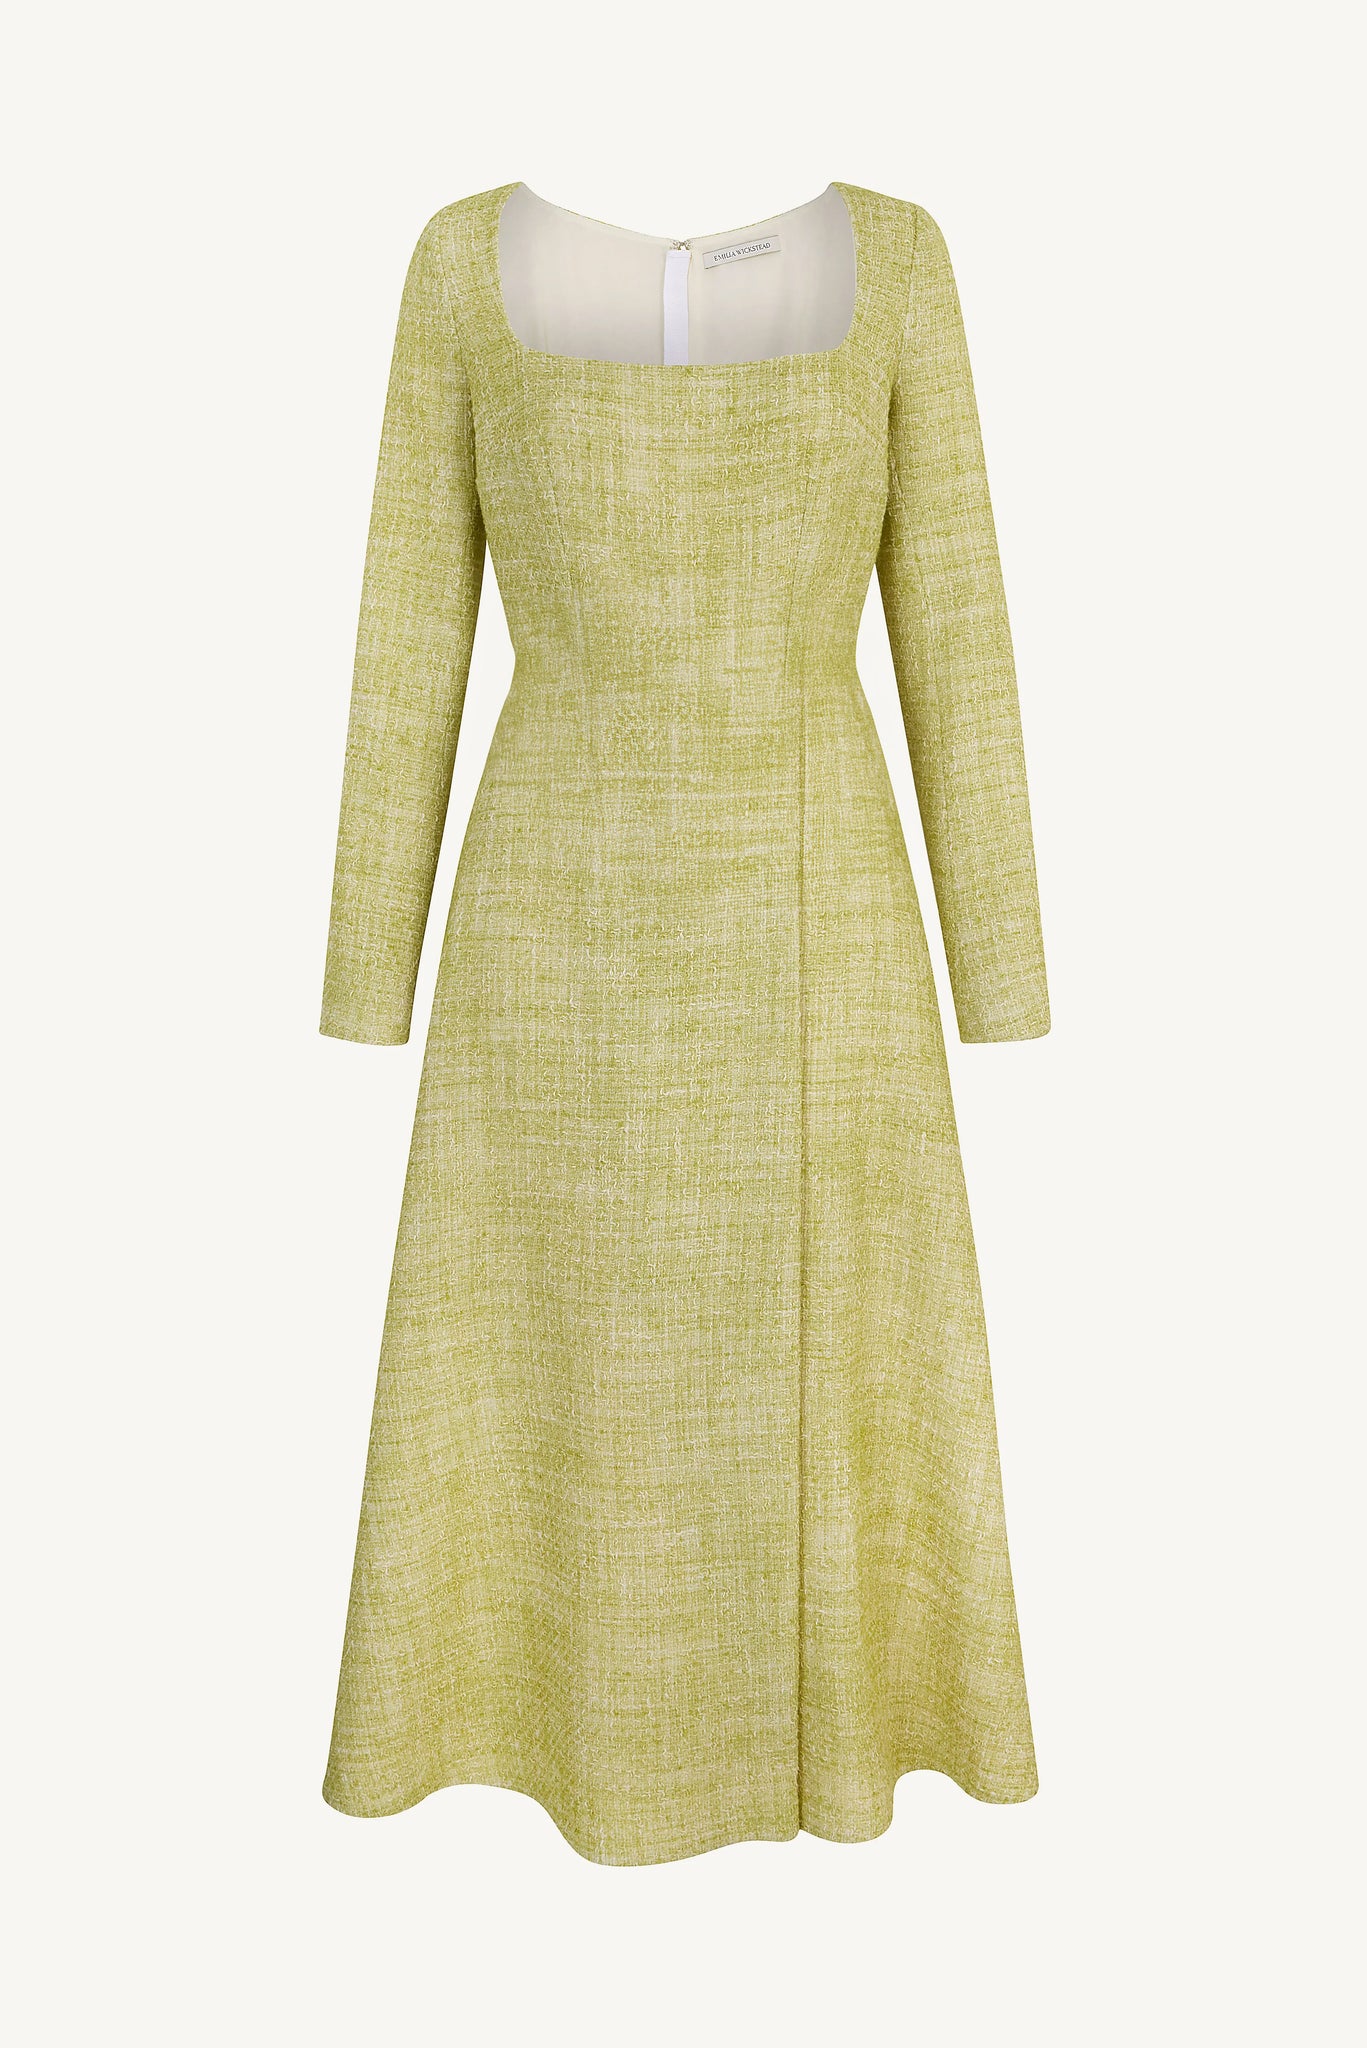 Fara Dress In Apple Green Cotton Tweed | Emilia Wickstead